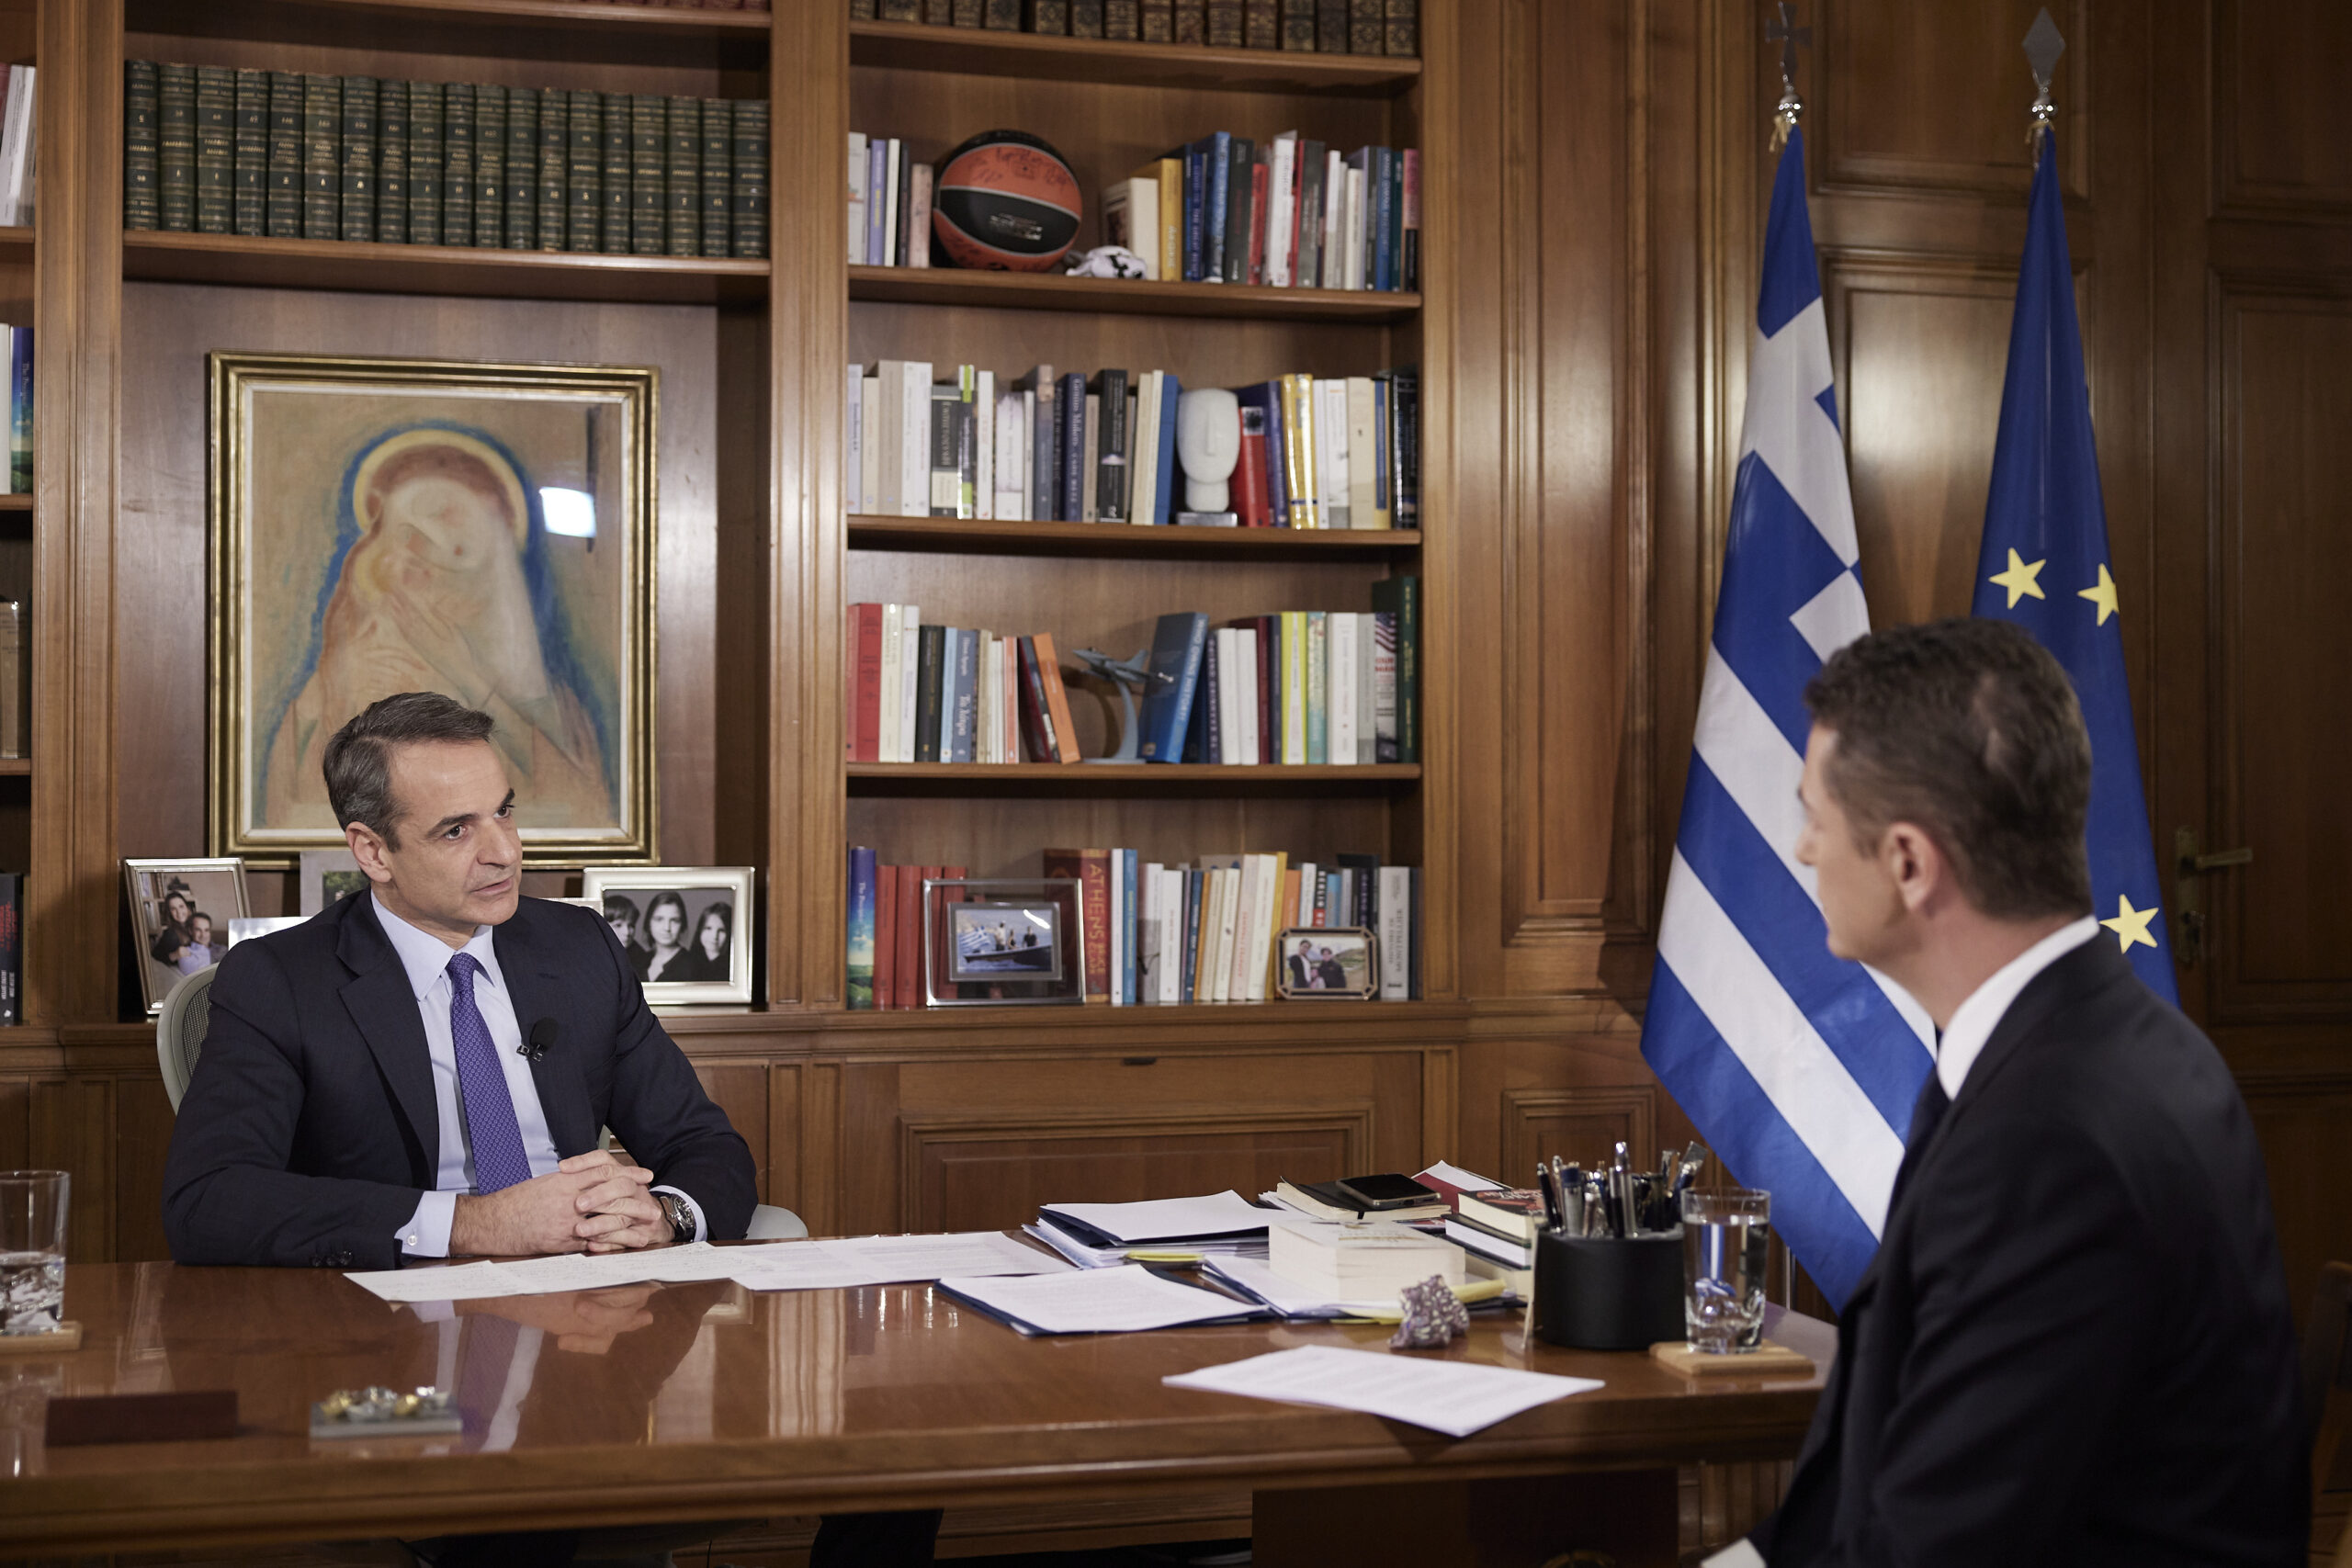 (Dimitris Papamitsos / Greek Prime Minister’s Office)